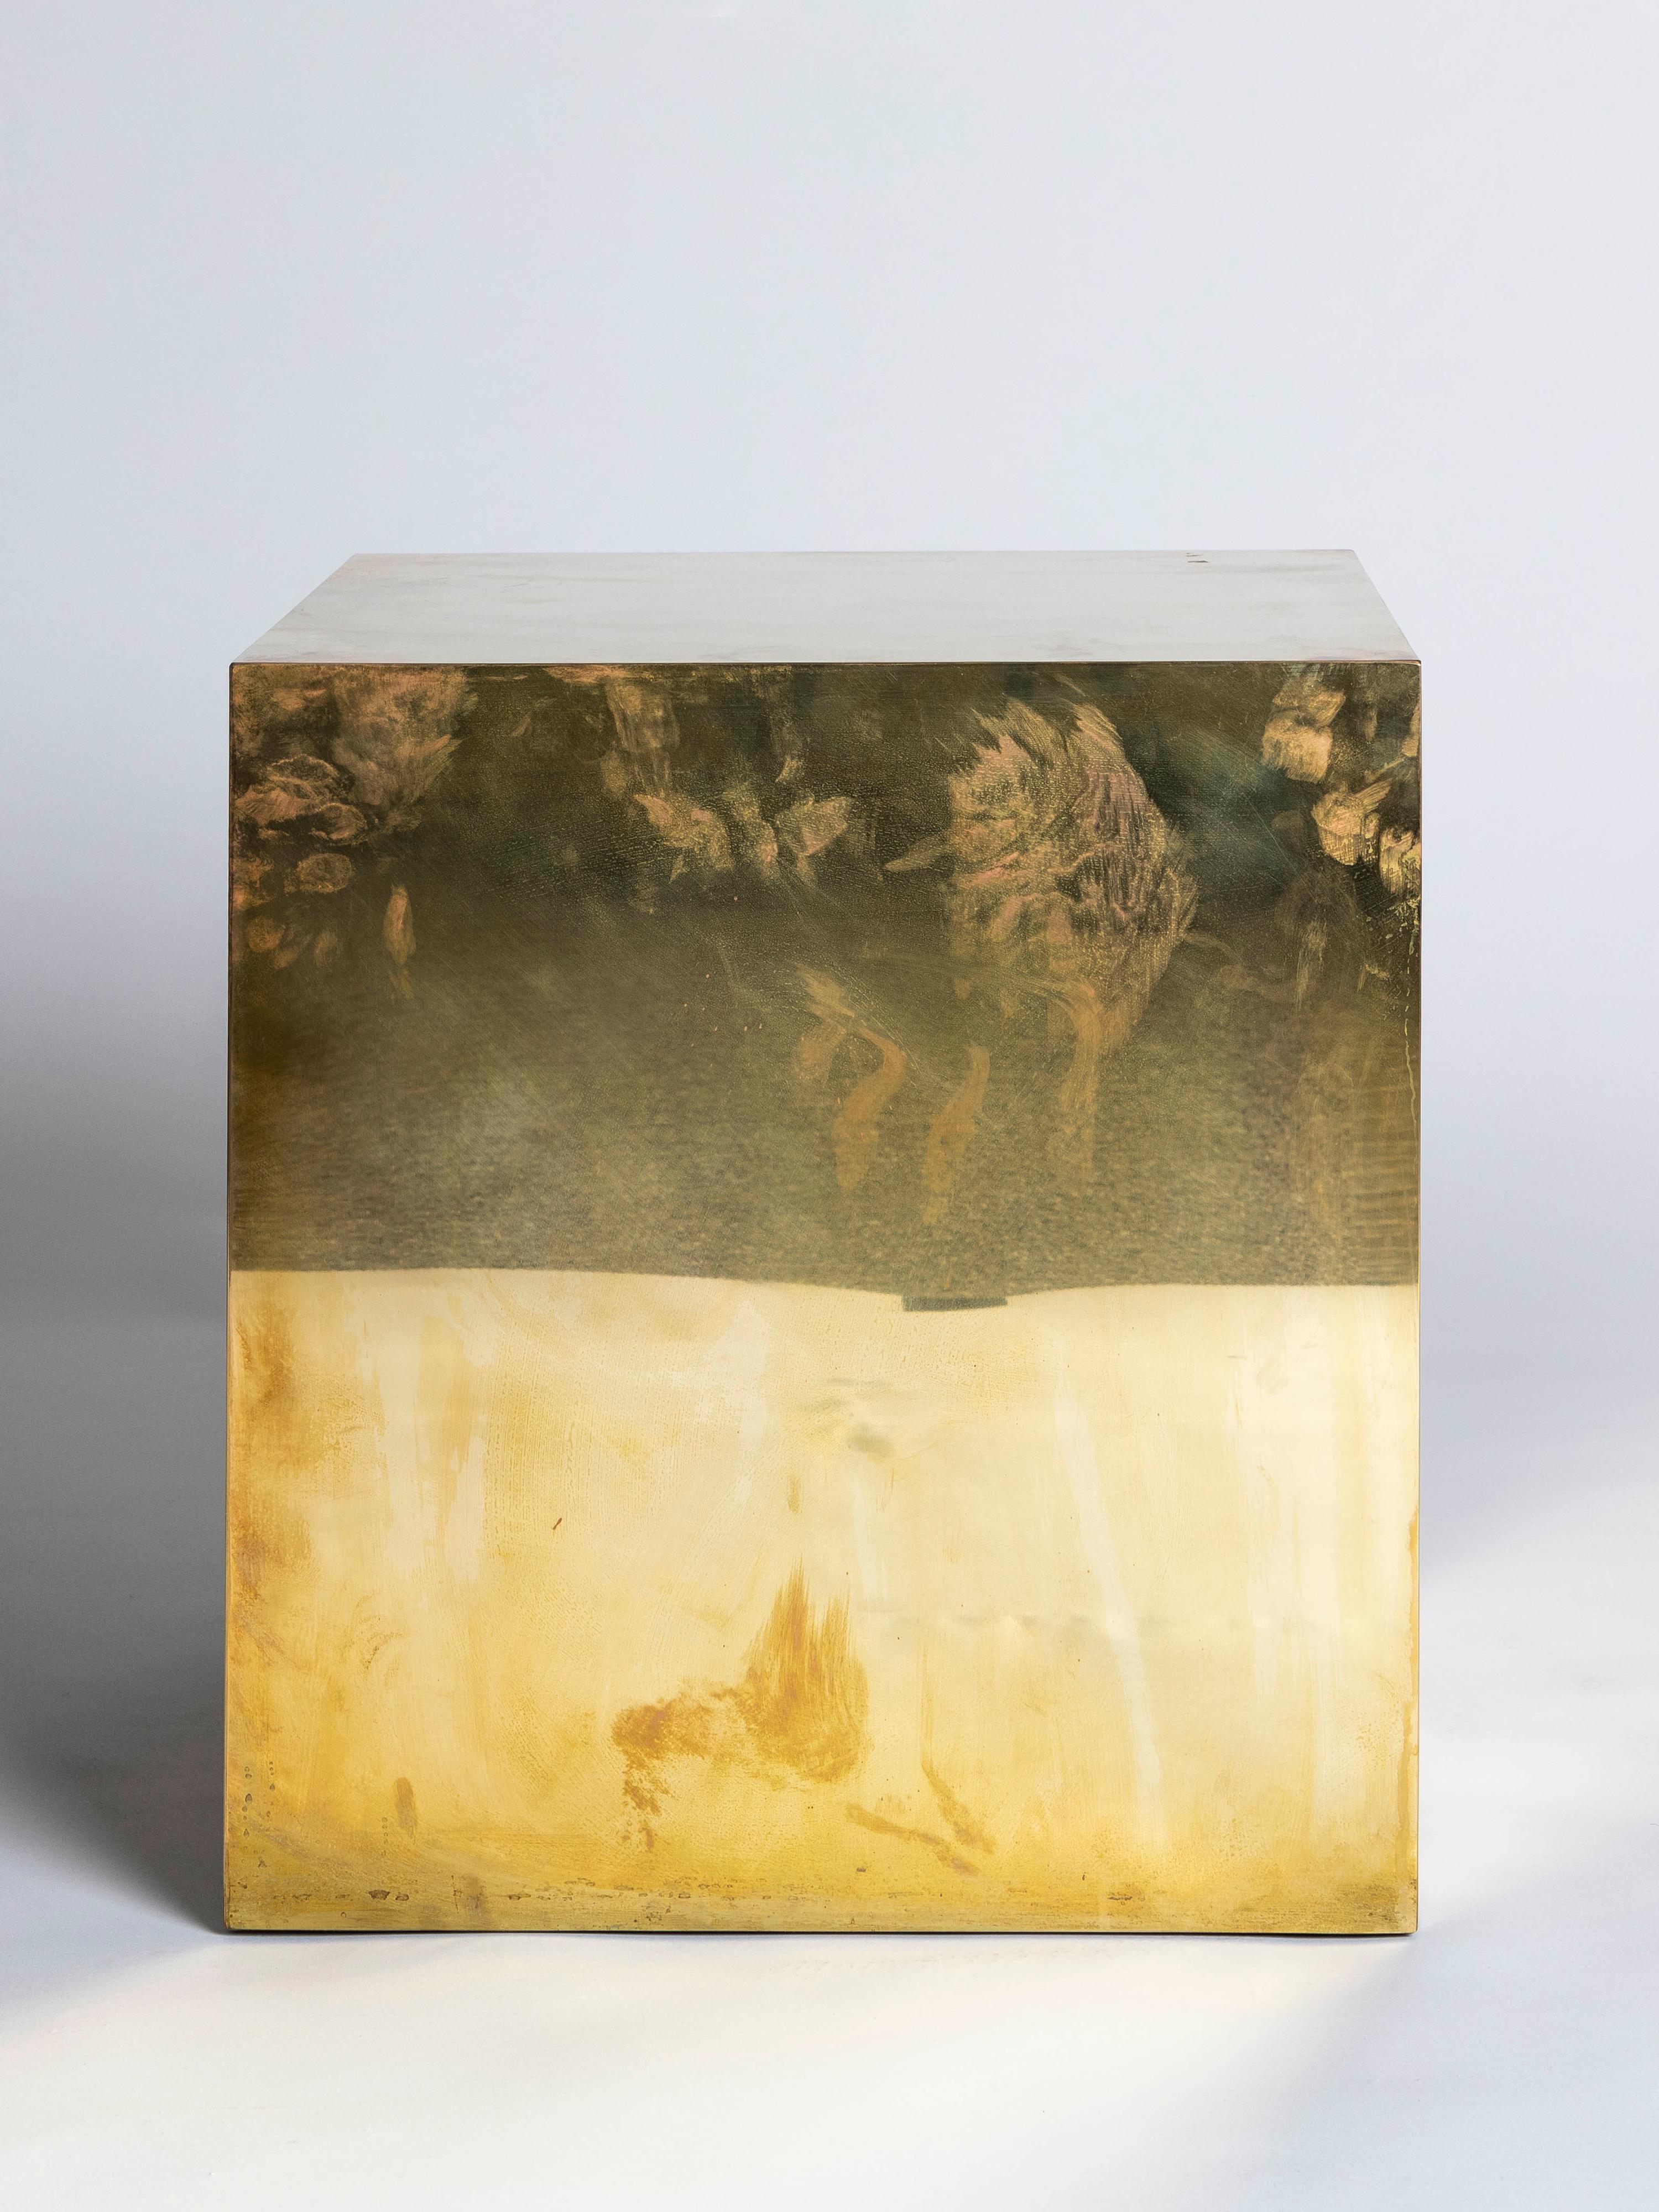 Polished brass cube side table, handmade in Germany by Birgit Israel.